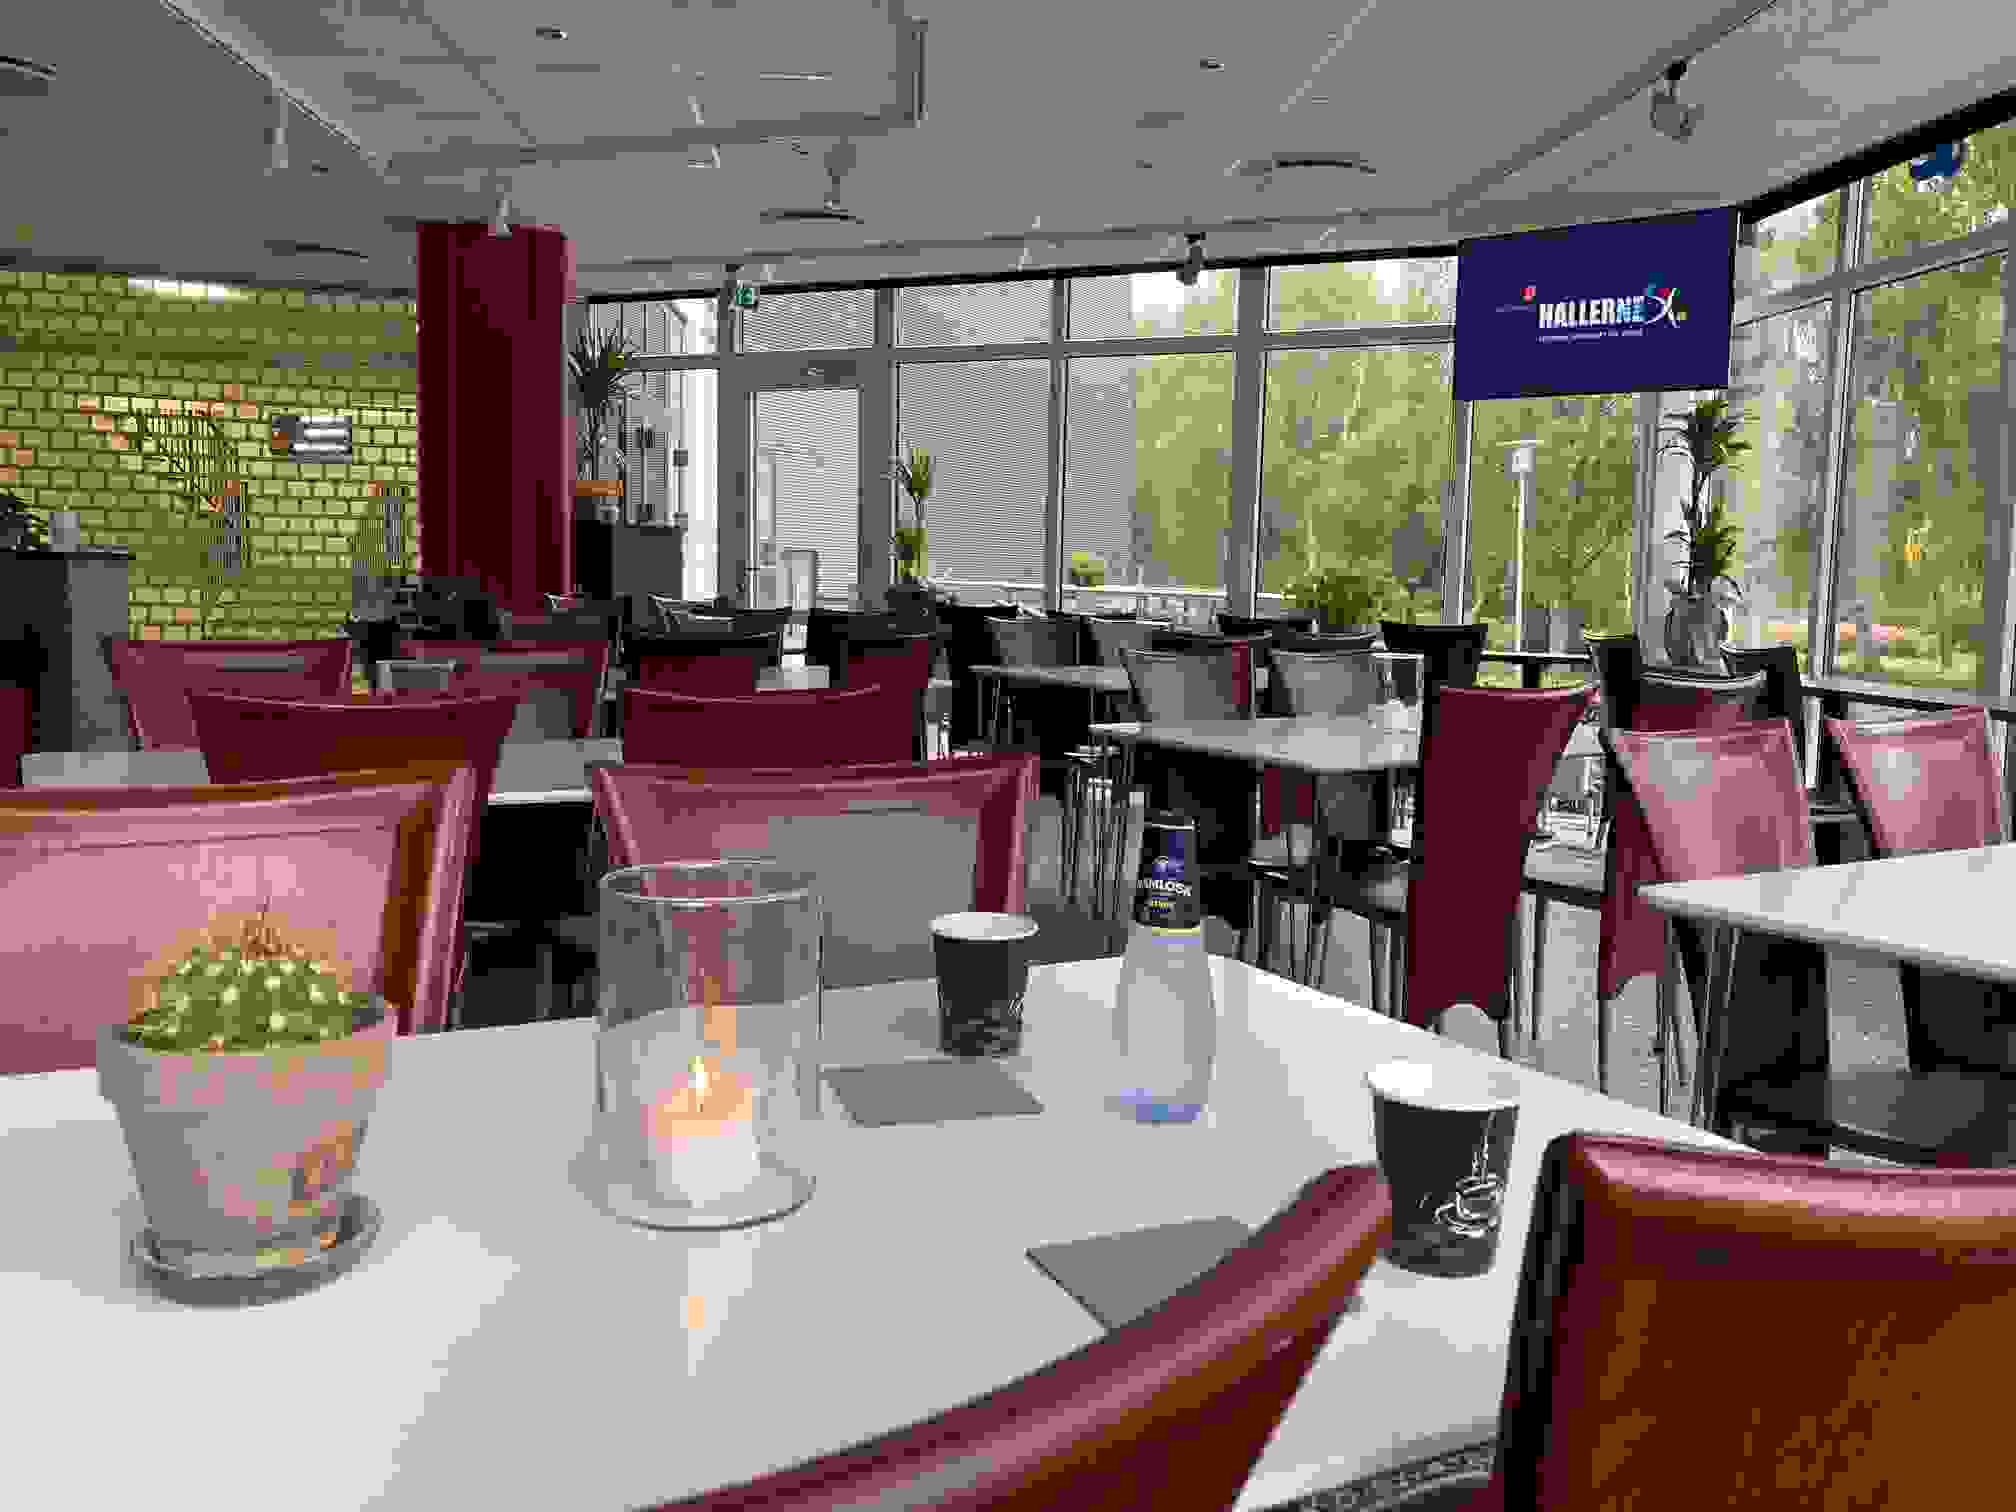 Restaurant & Cafe